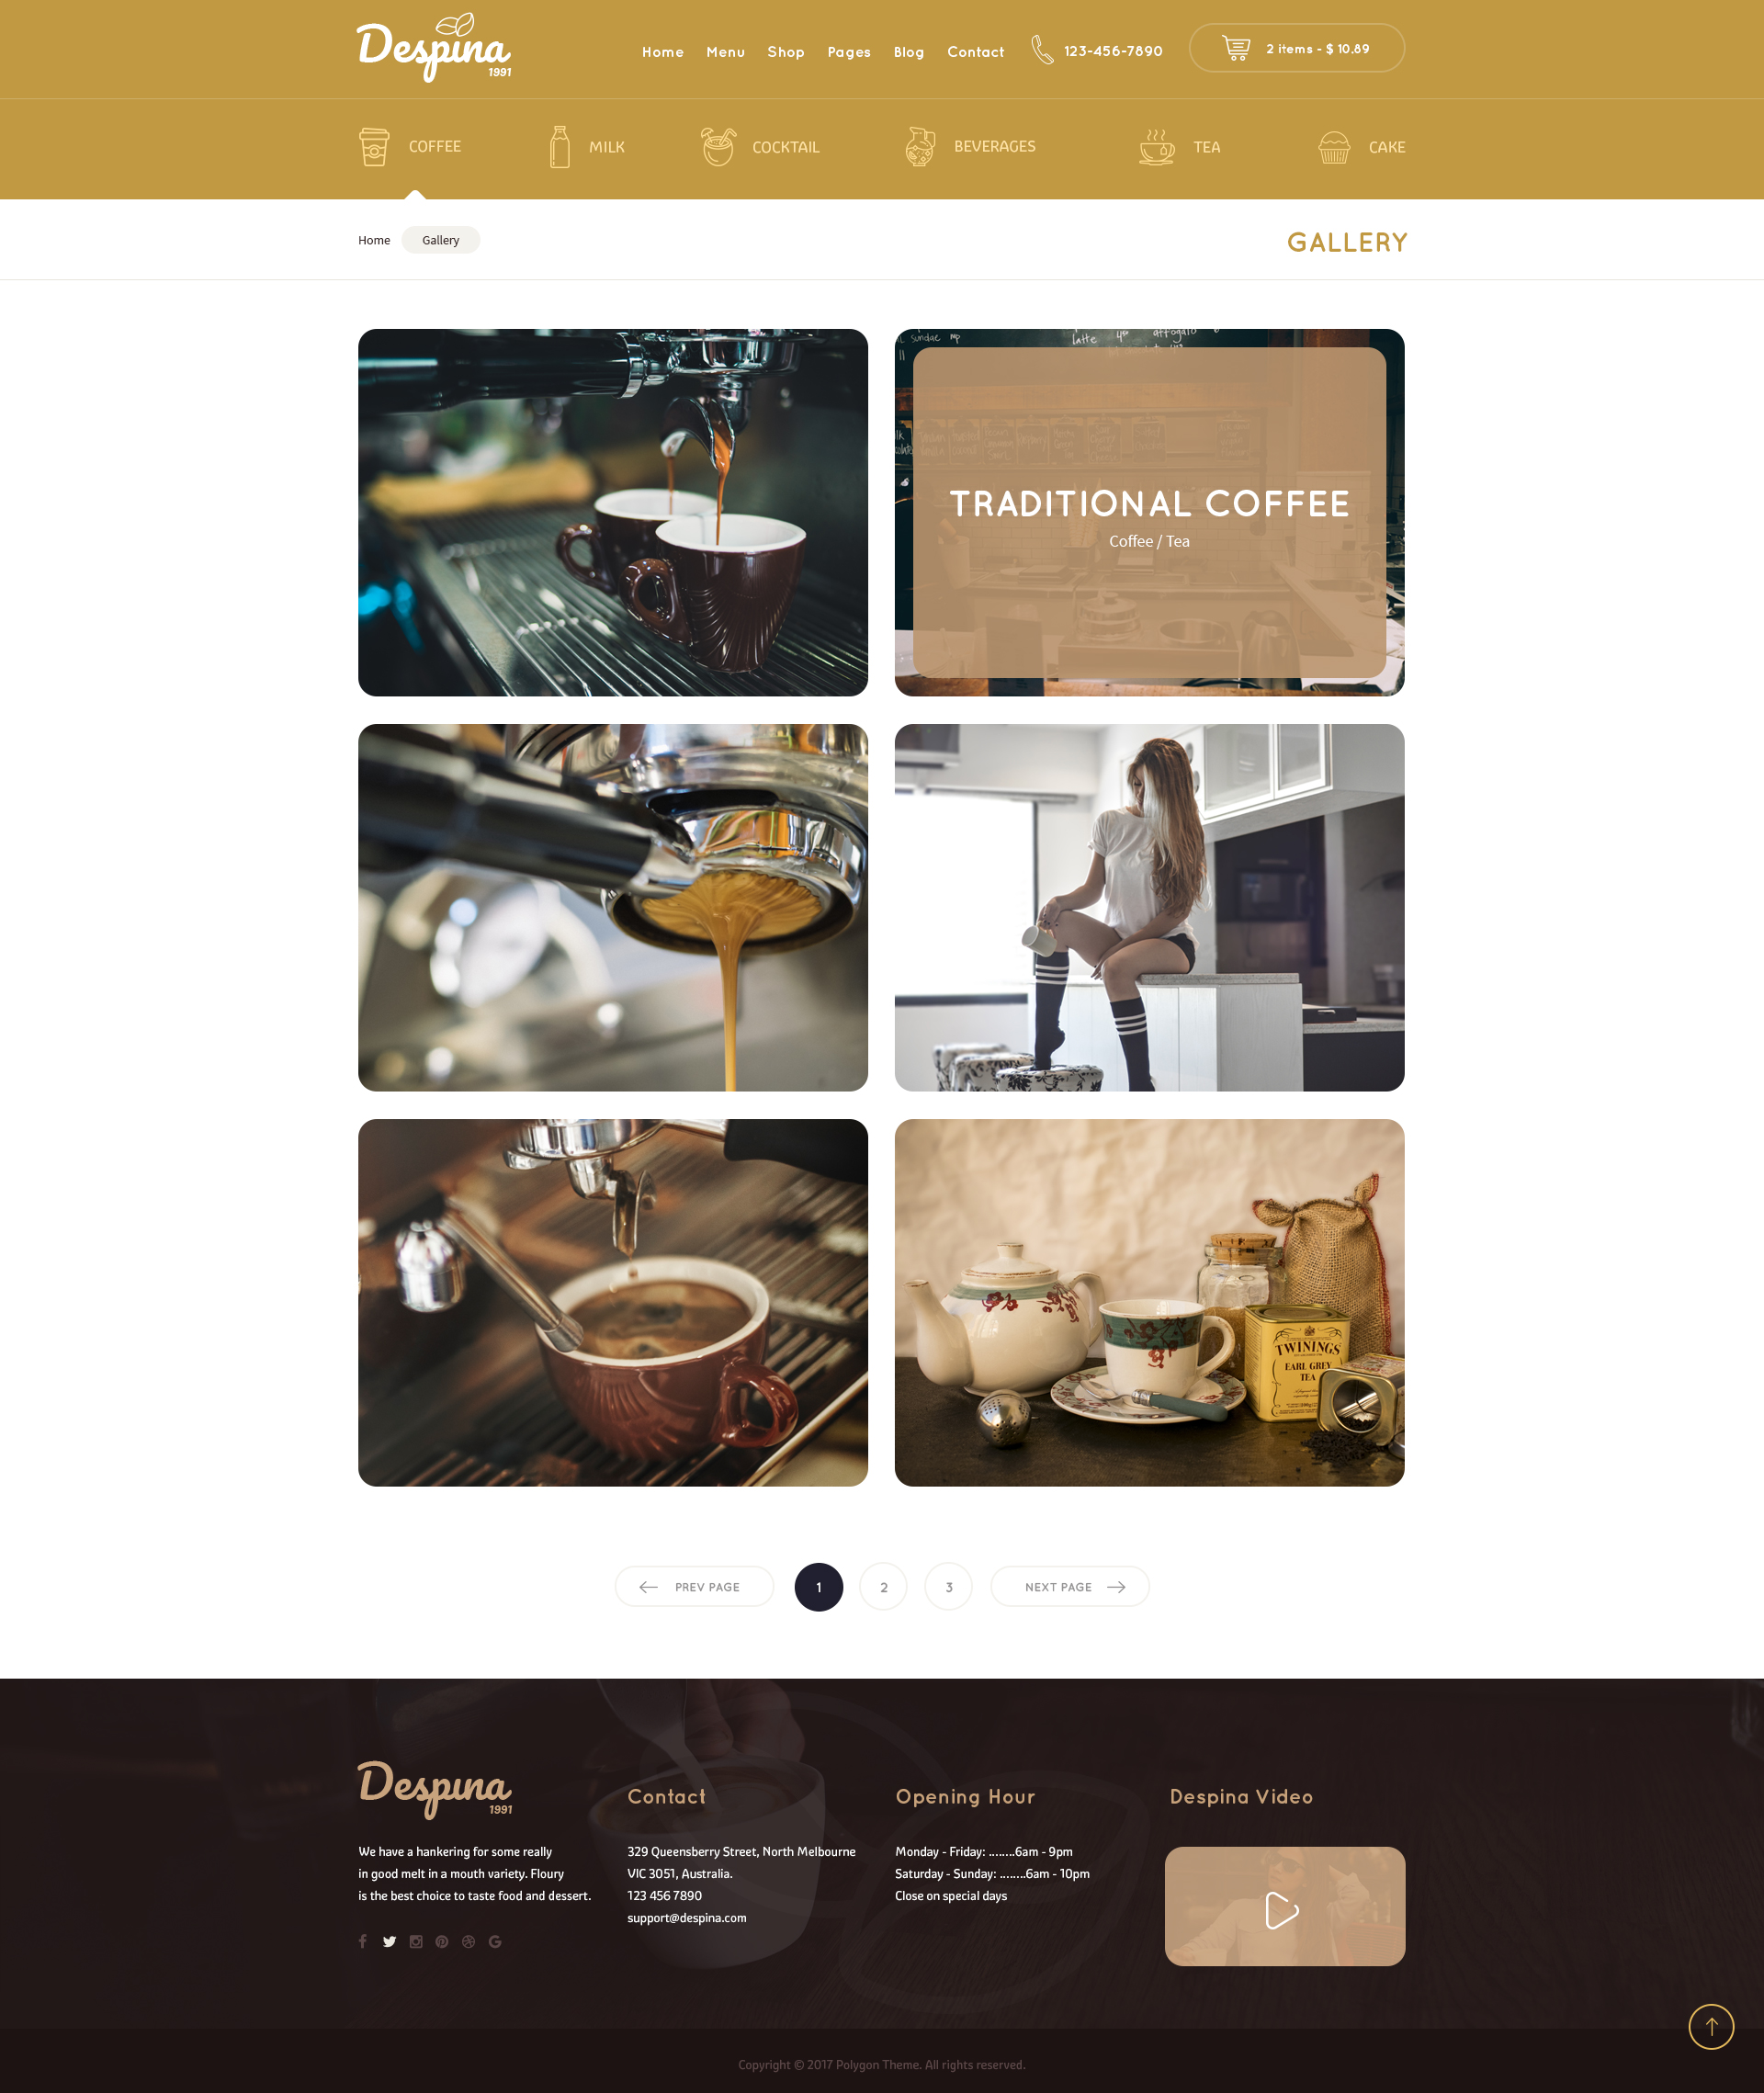 Despina - Coffee & Cake PSD Template